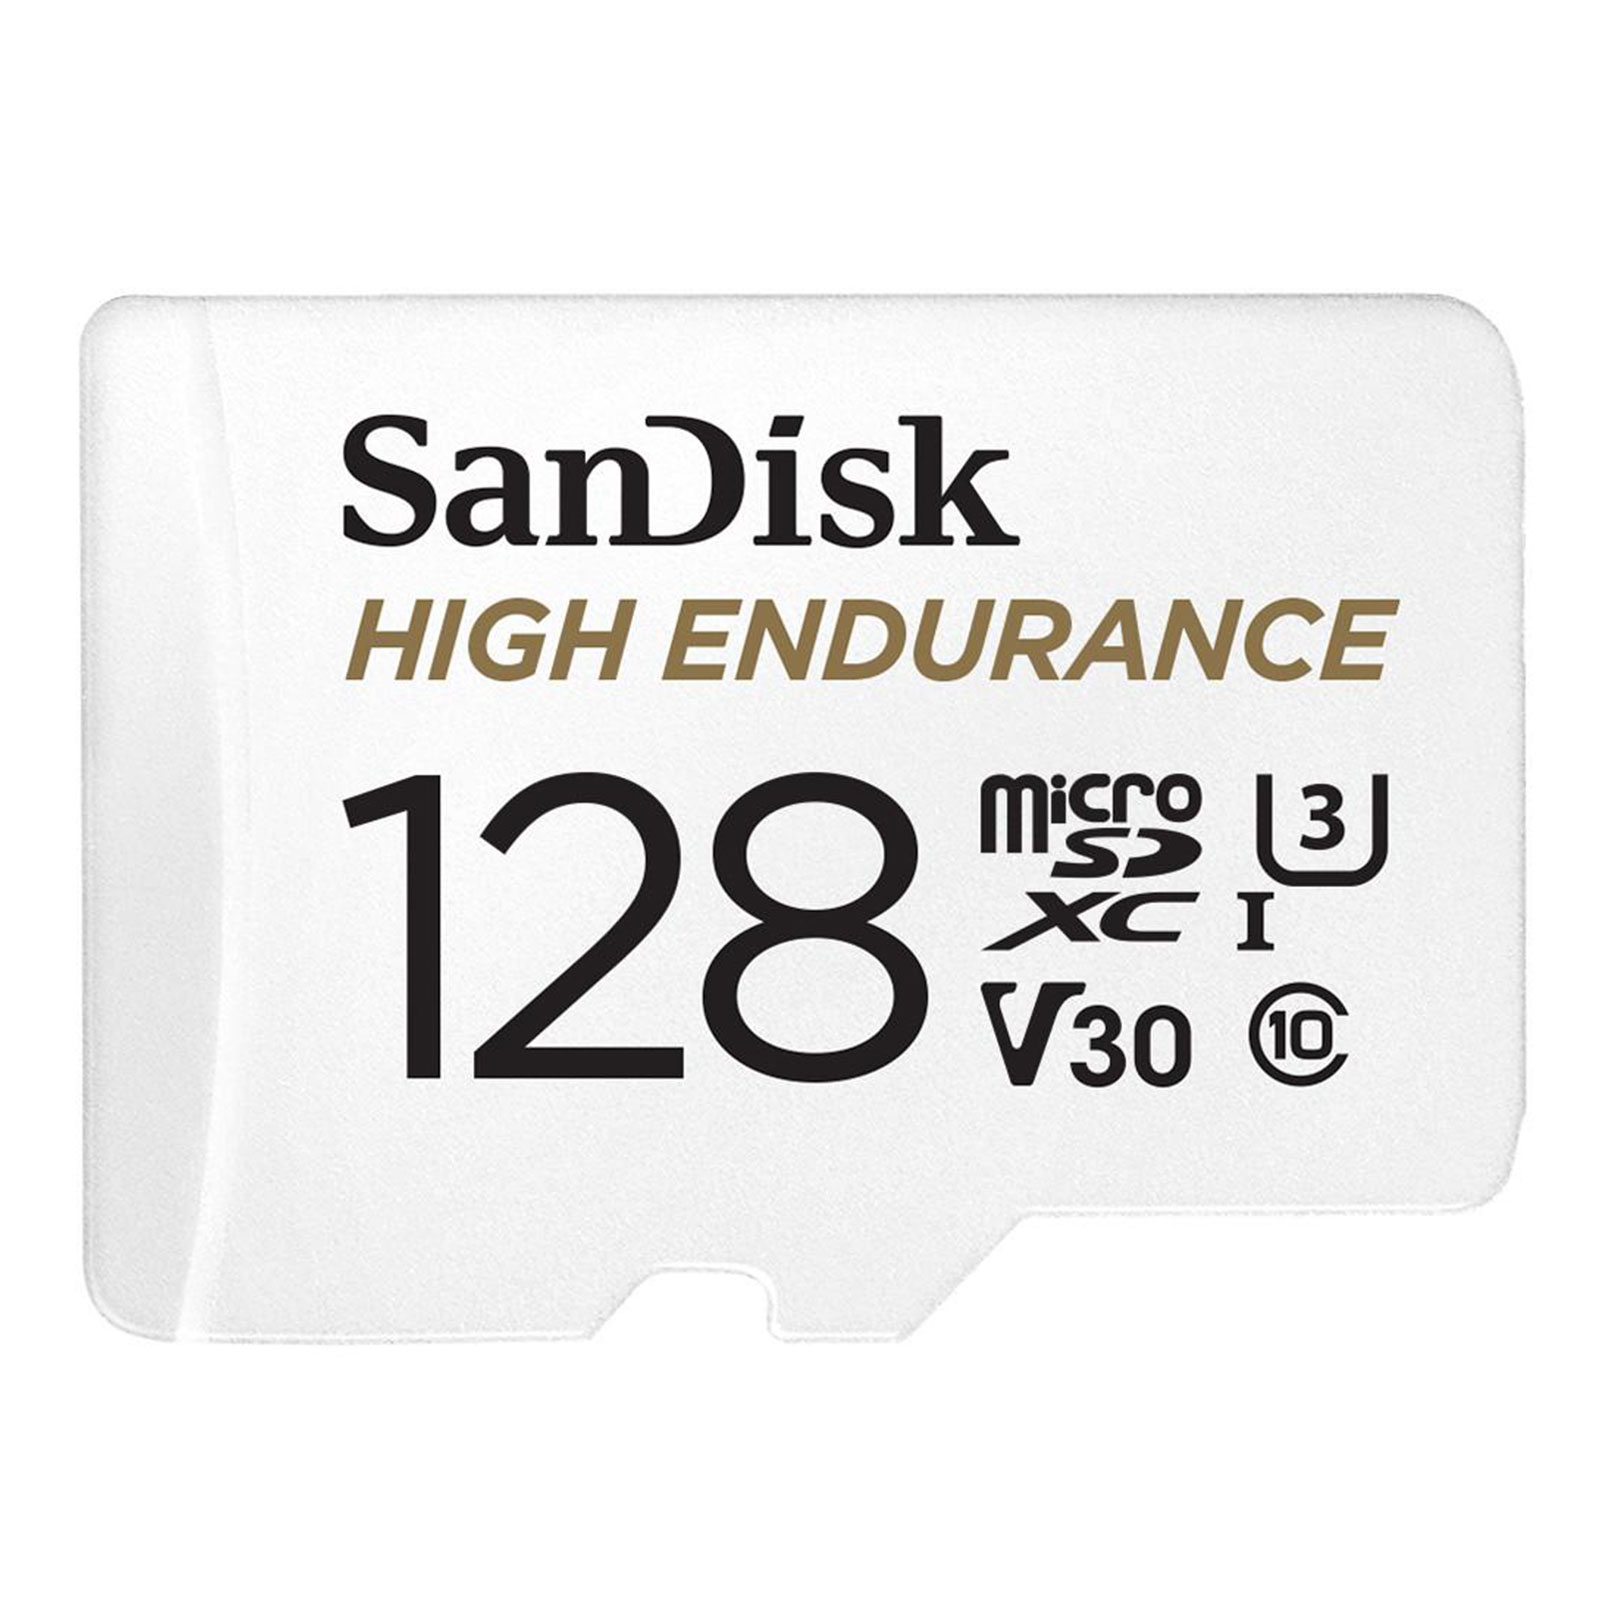 sandisk microSDXC High Endurance 128GB CL10